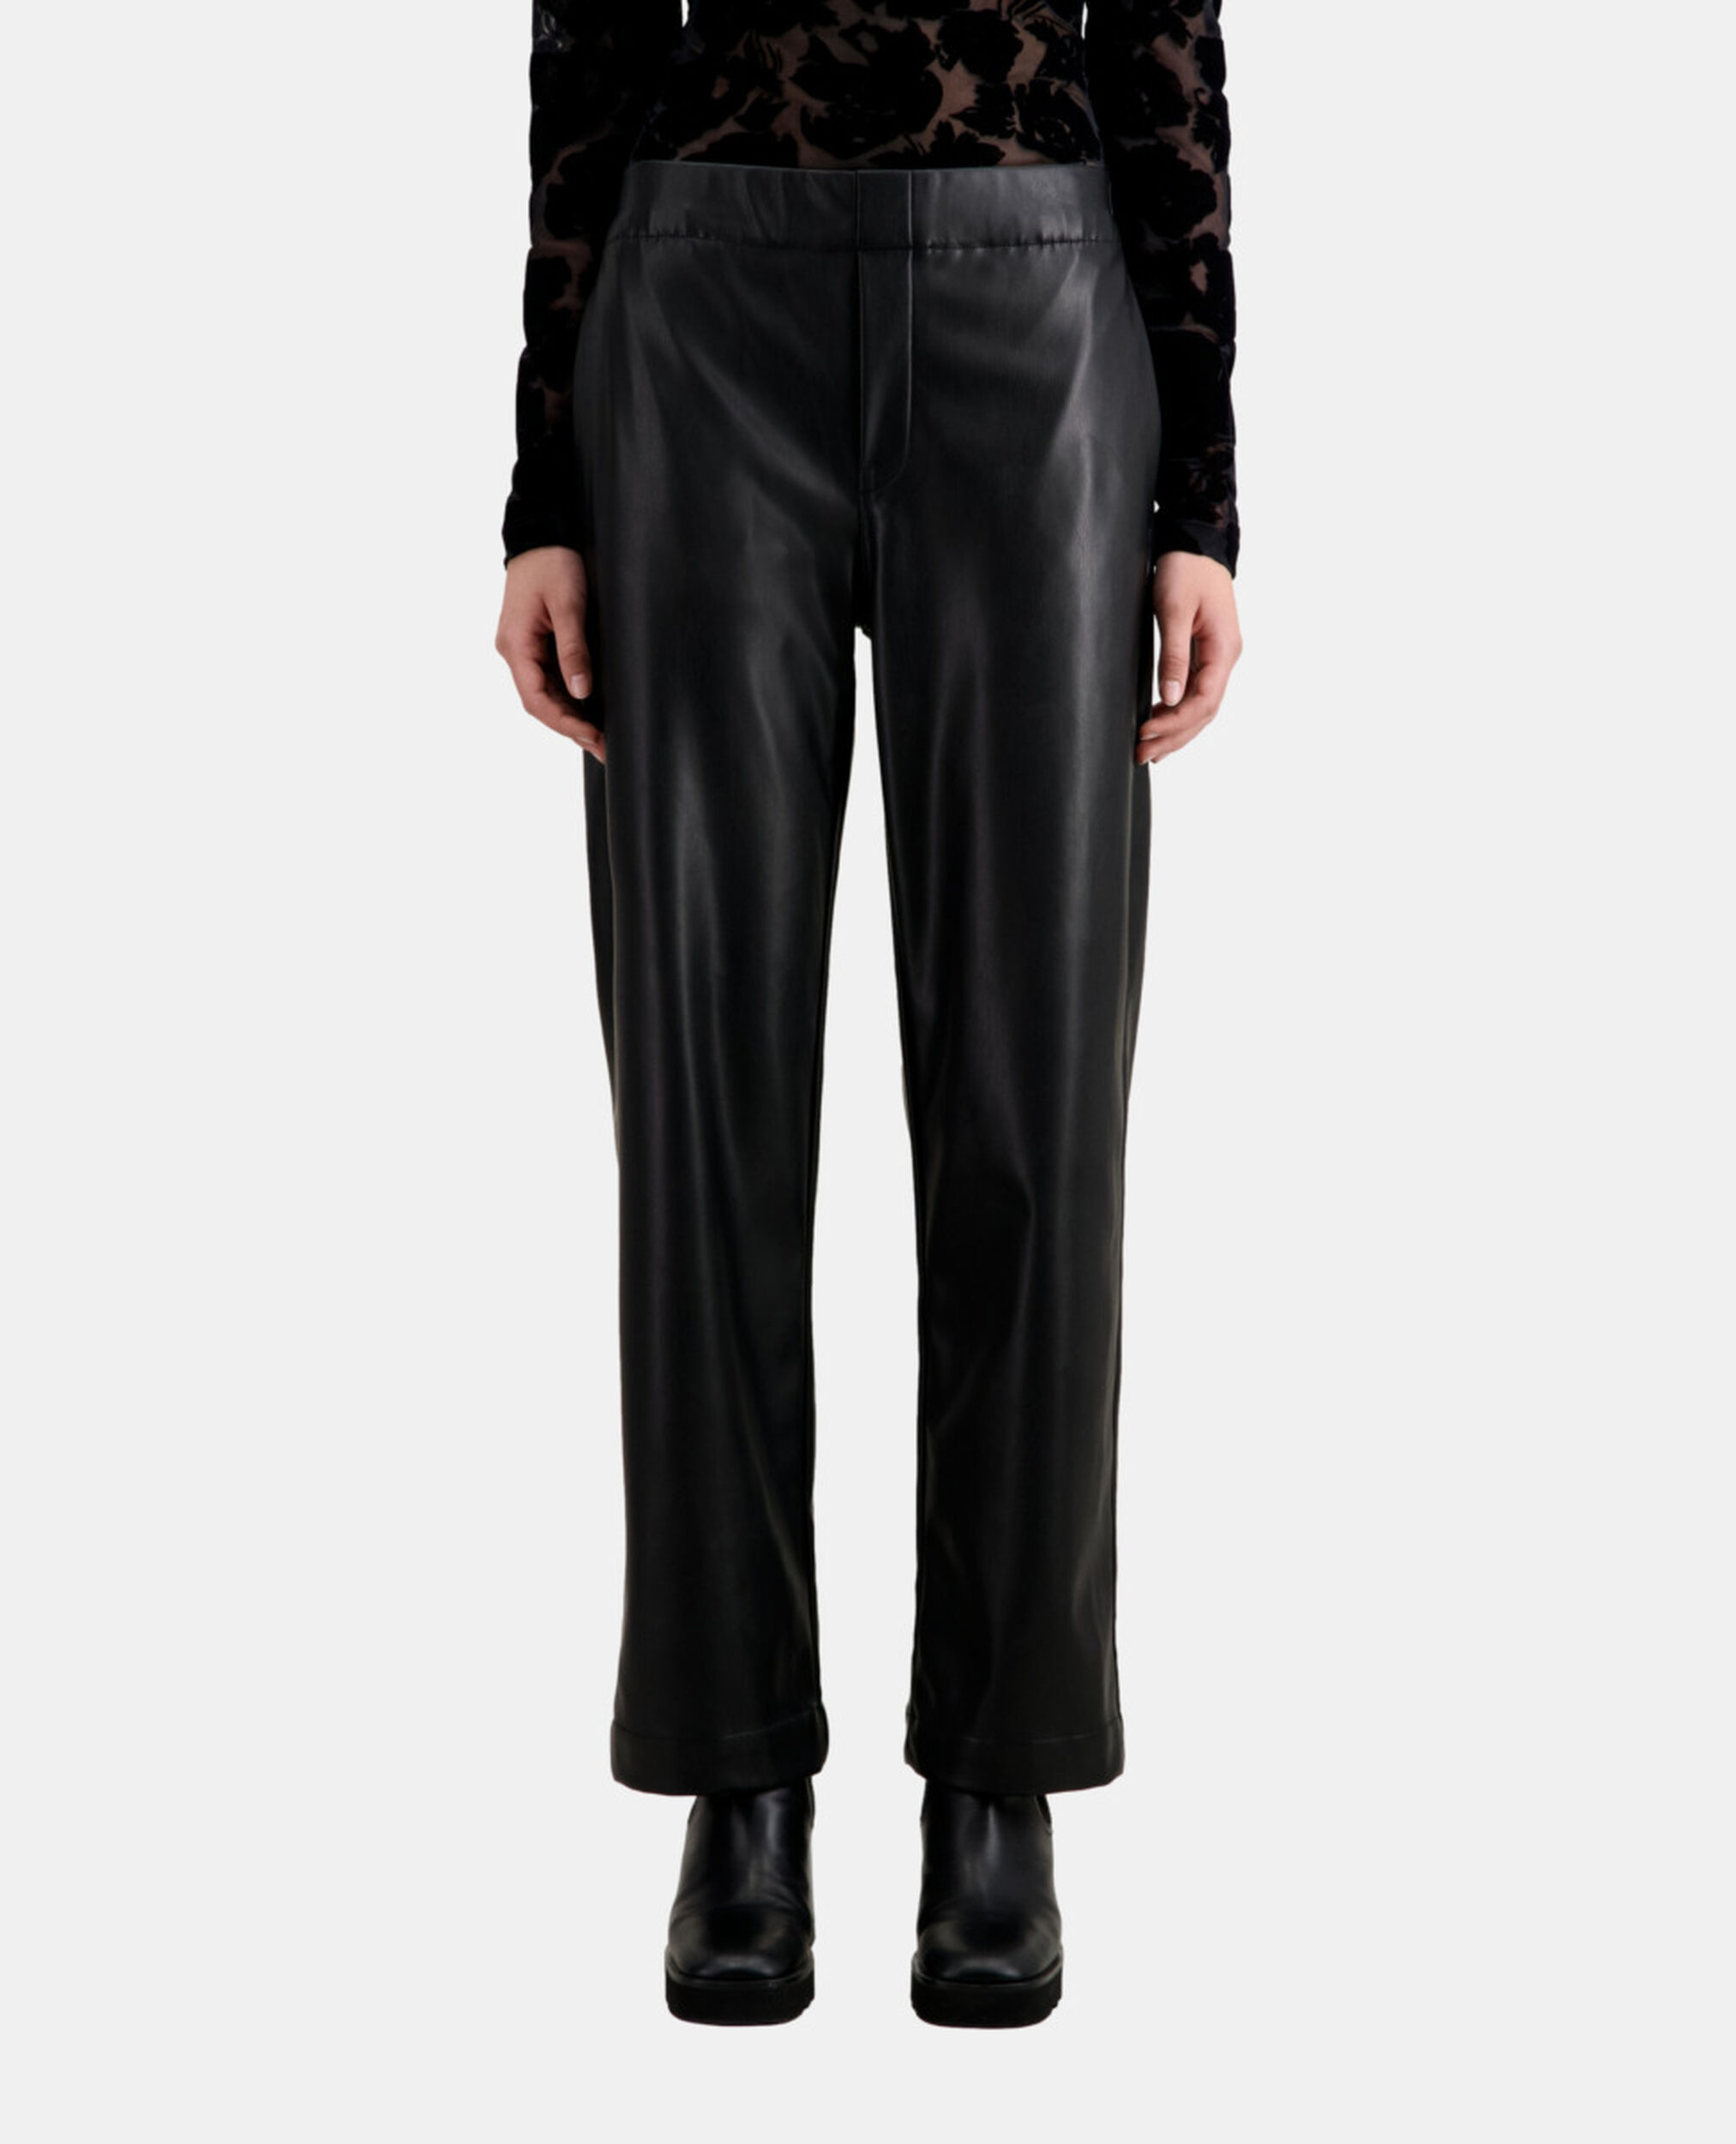 Pantalon noir effet cuir, BLACK, hi-res image number null